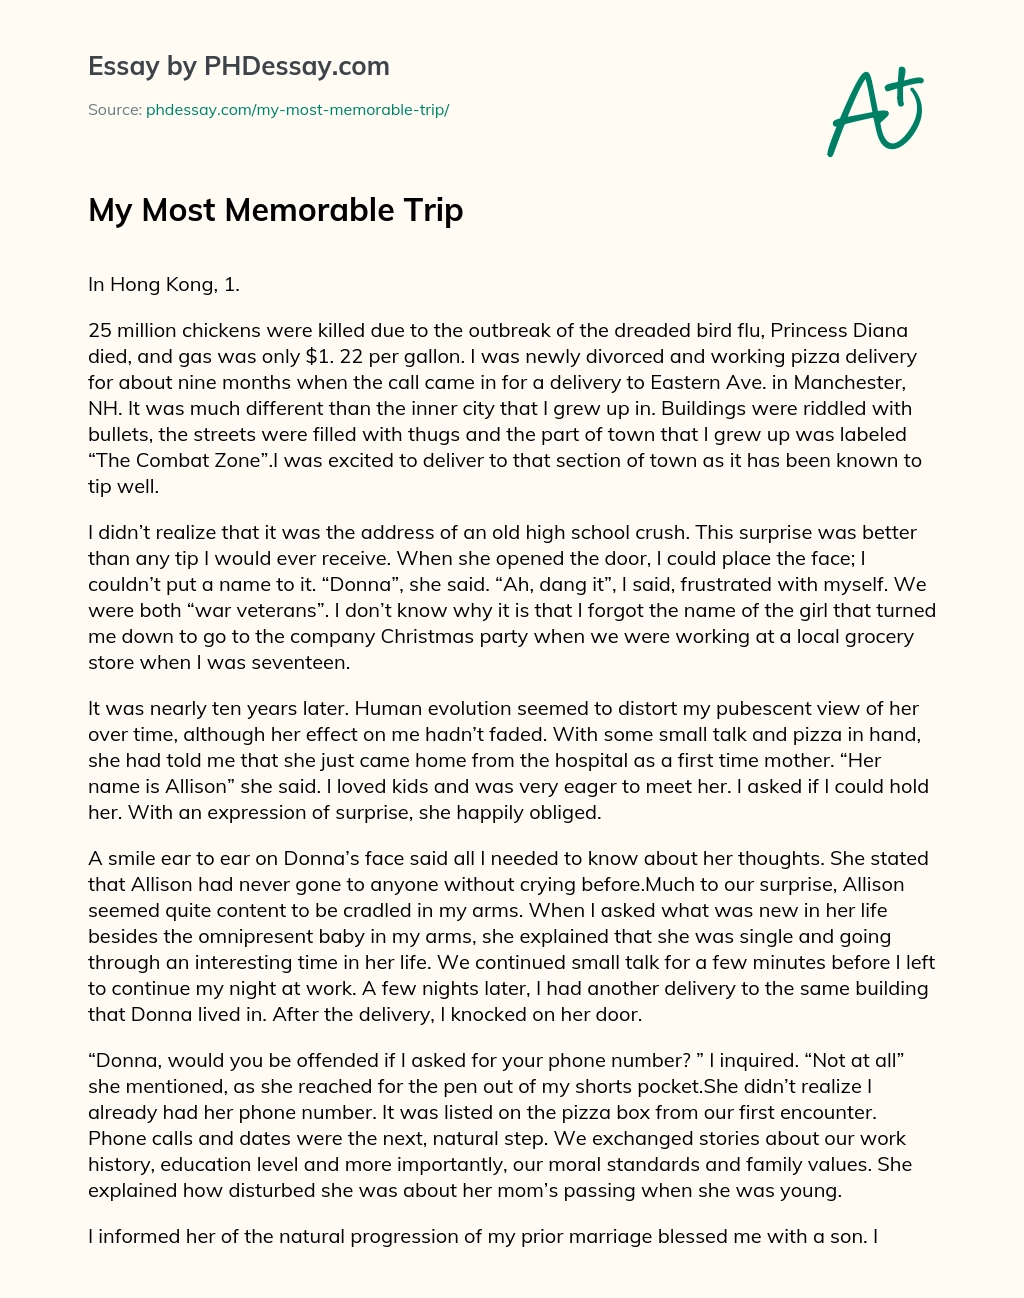 short essay on memorable trip